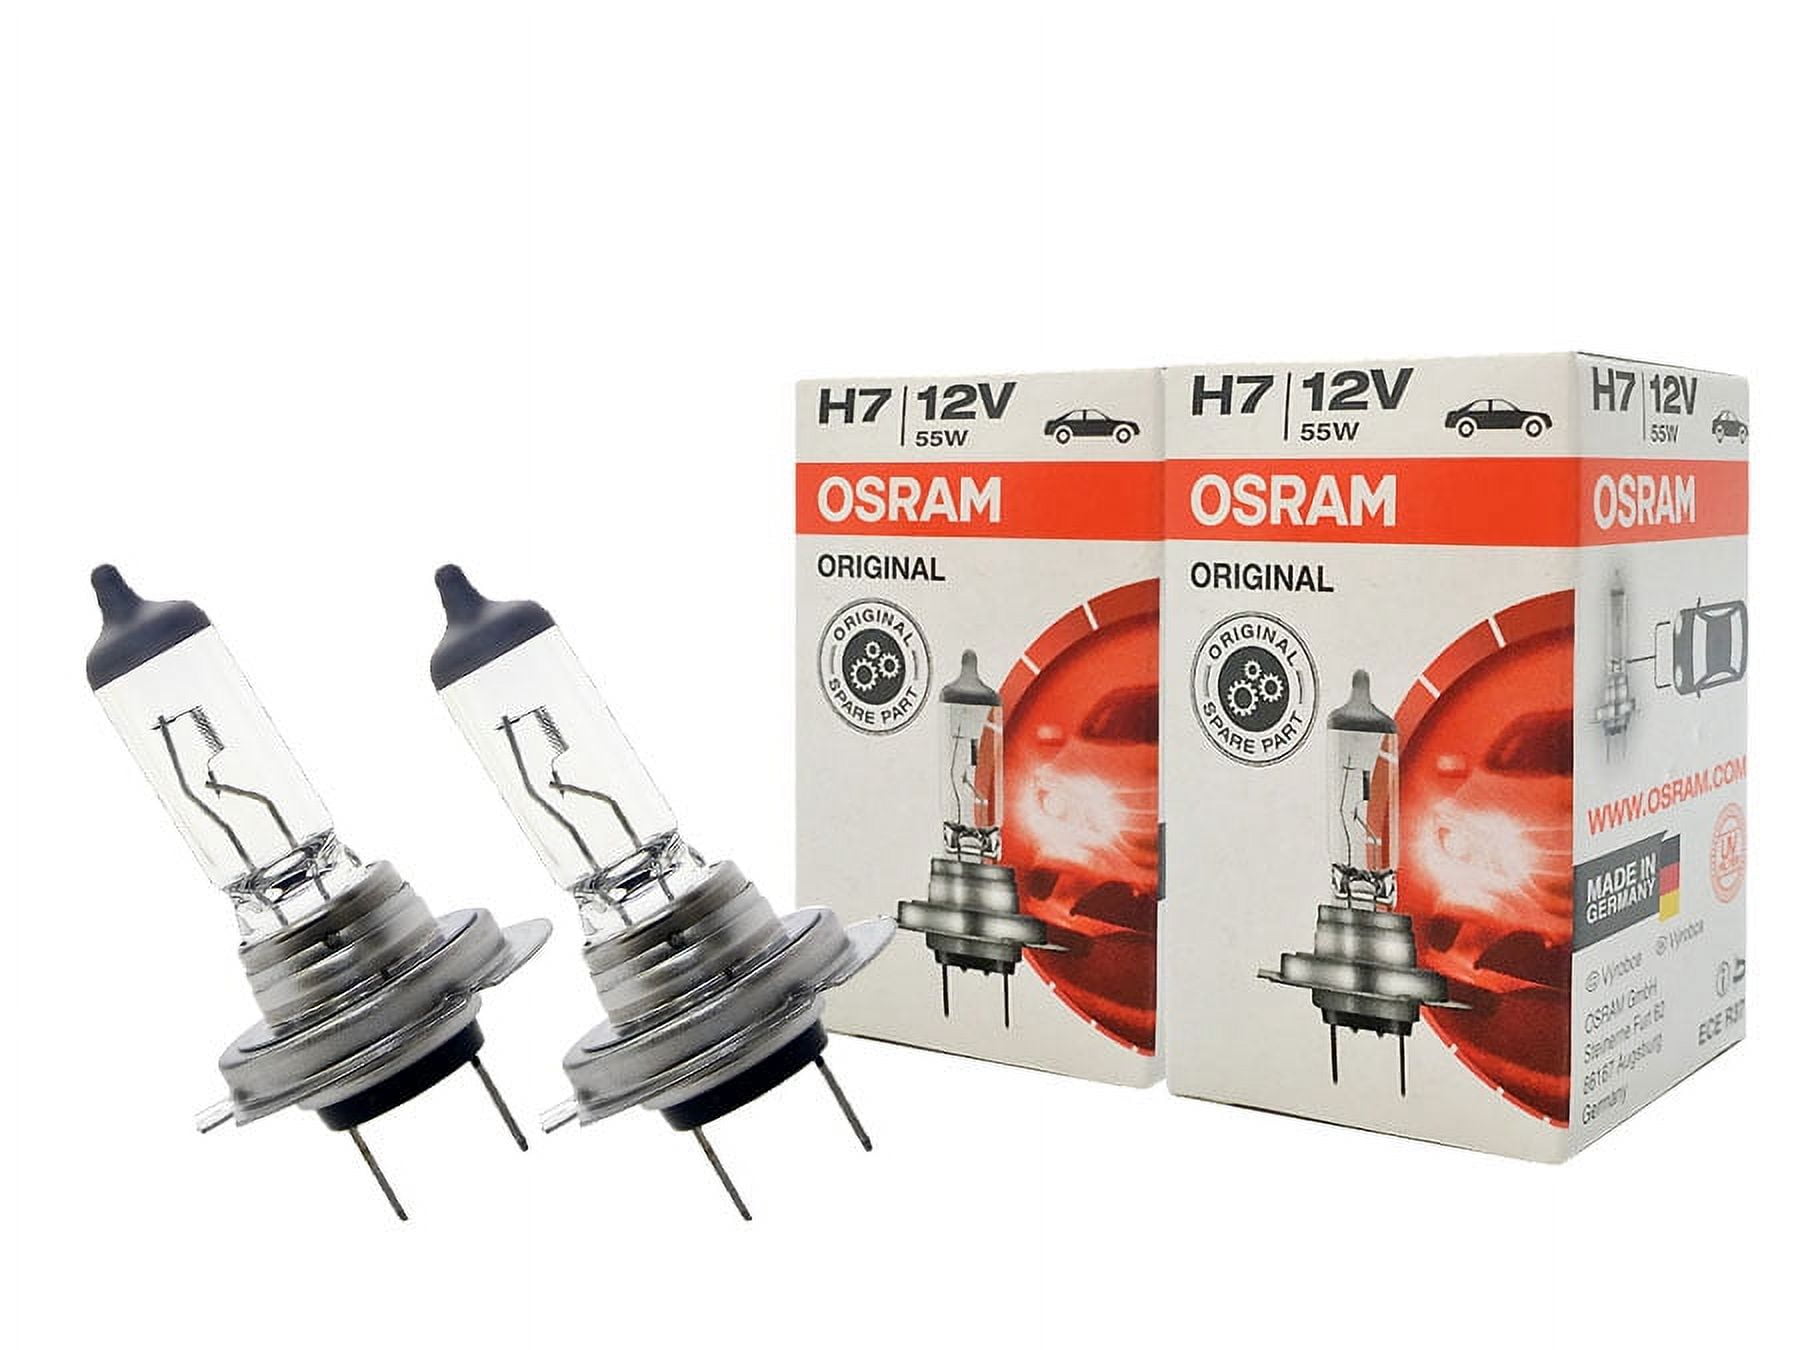 Osram H7 12v 55W 477 - Single bulb